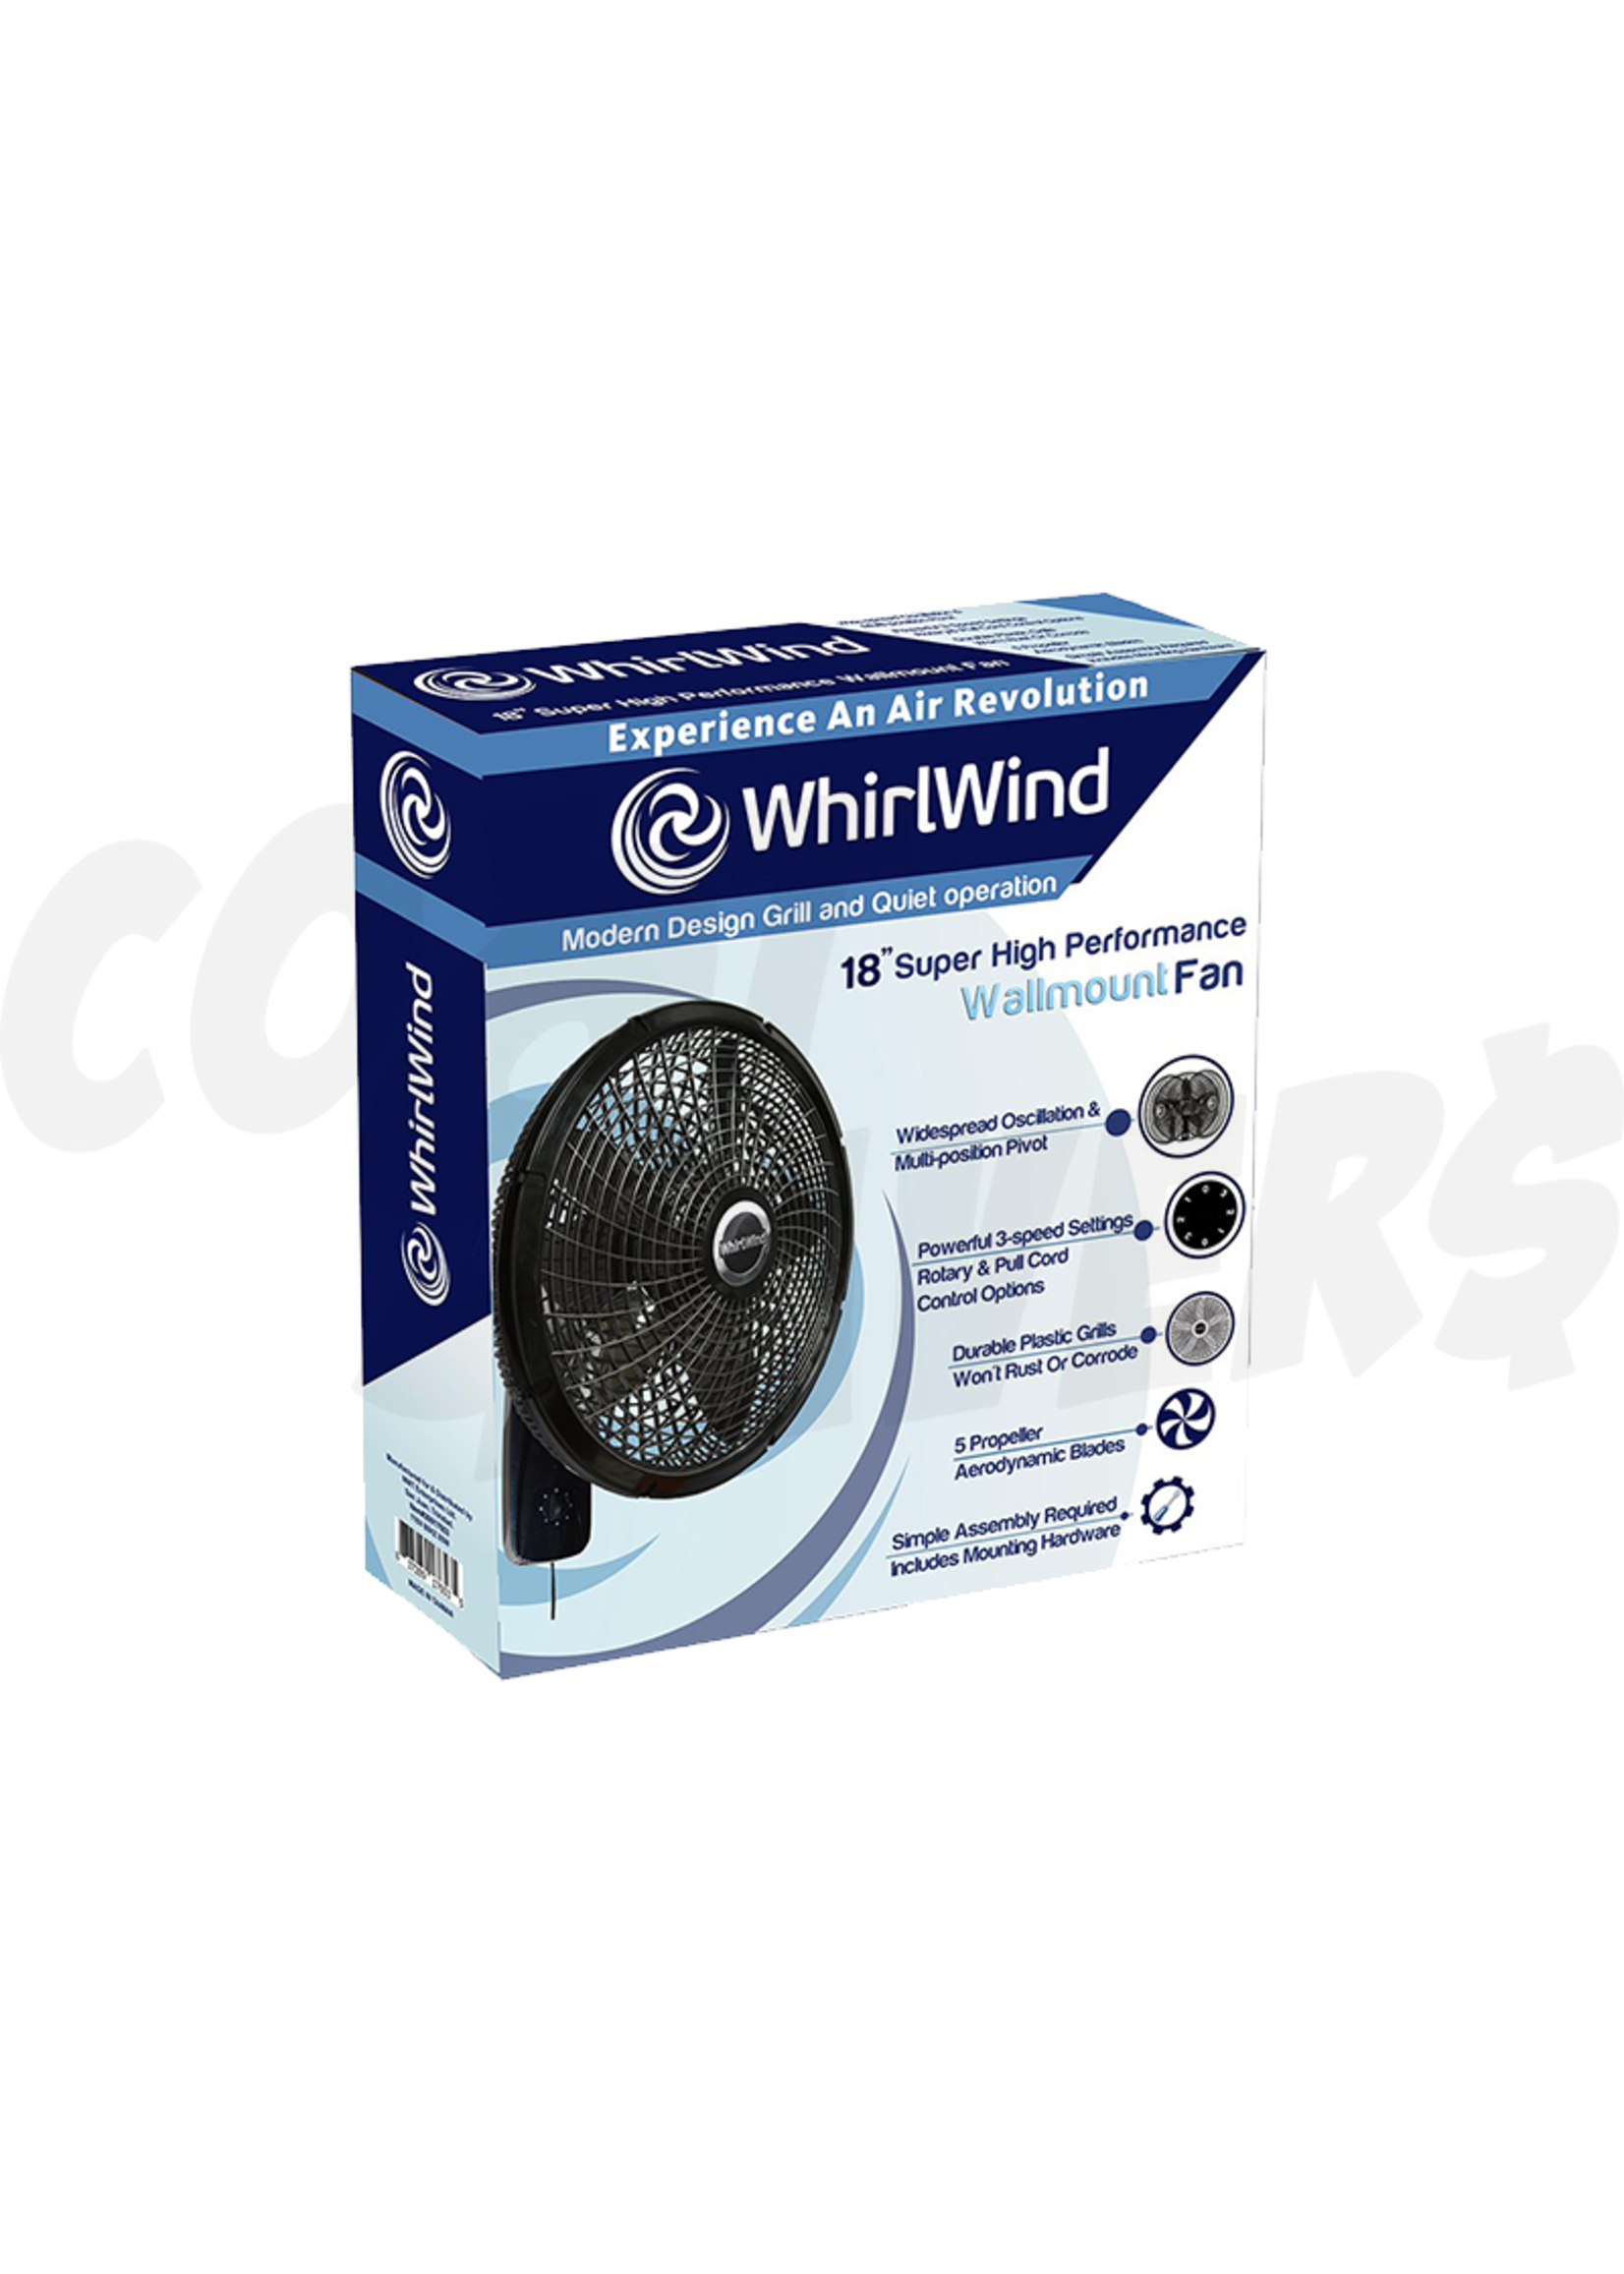 Whirlwind Whirlwind 18" High Performance Wall Mount Fan